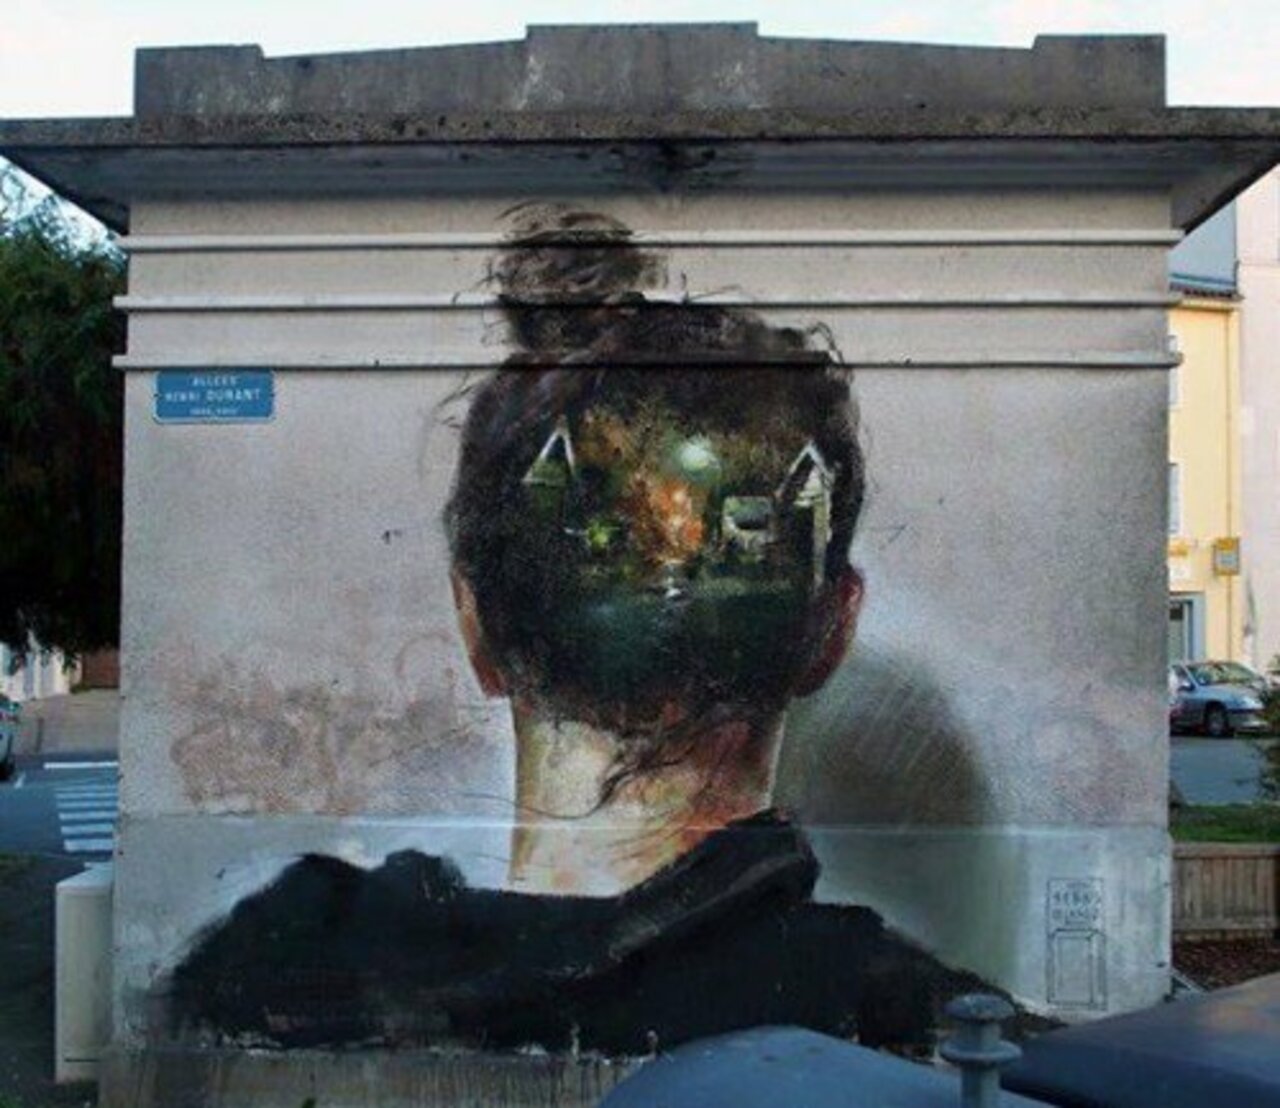 RT @DavidBonnand: ... #Niort #France
by #SebasVelasco & #ManoloMesa ()
#streetart #graffiti #art https://t.co/esnGE4cDtn